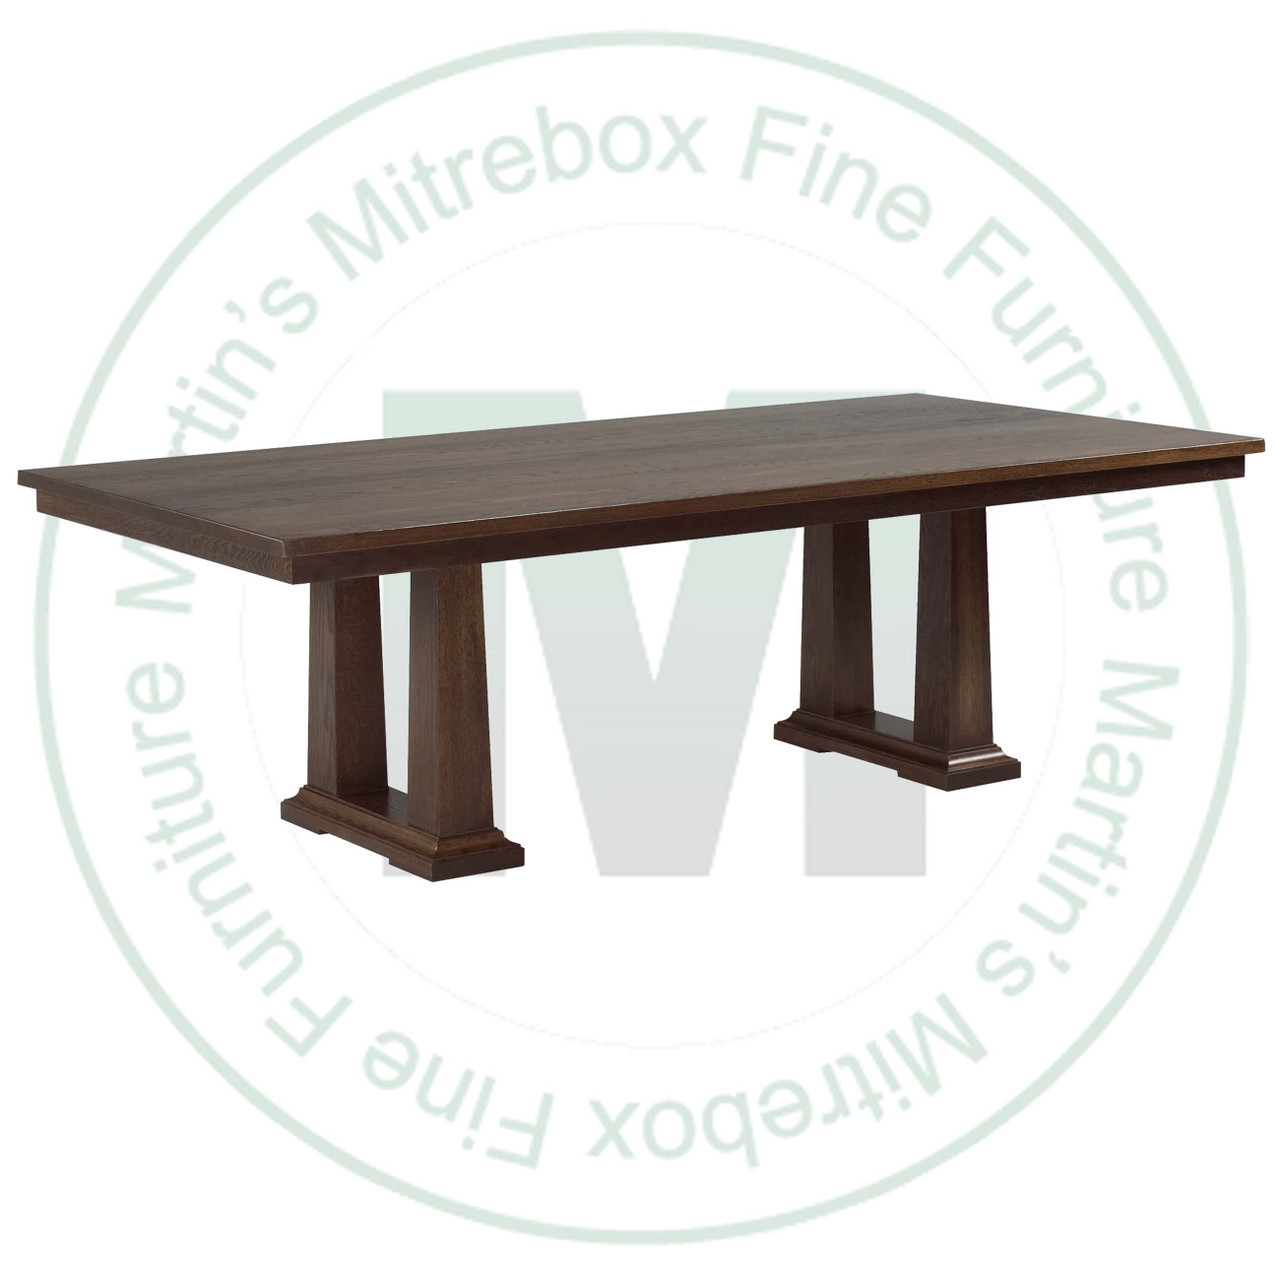 Oak Acropolis Solid Top Double Pedestal Table 42''D x 120''W x 30''H Table Has 1.25'' Thick Top